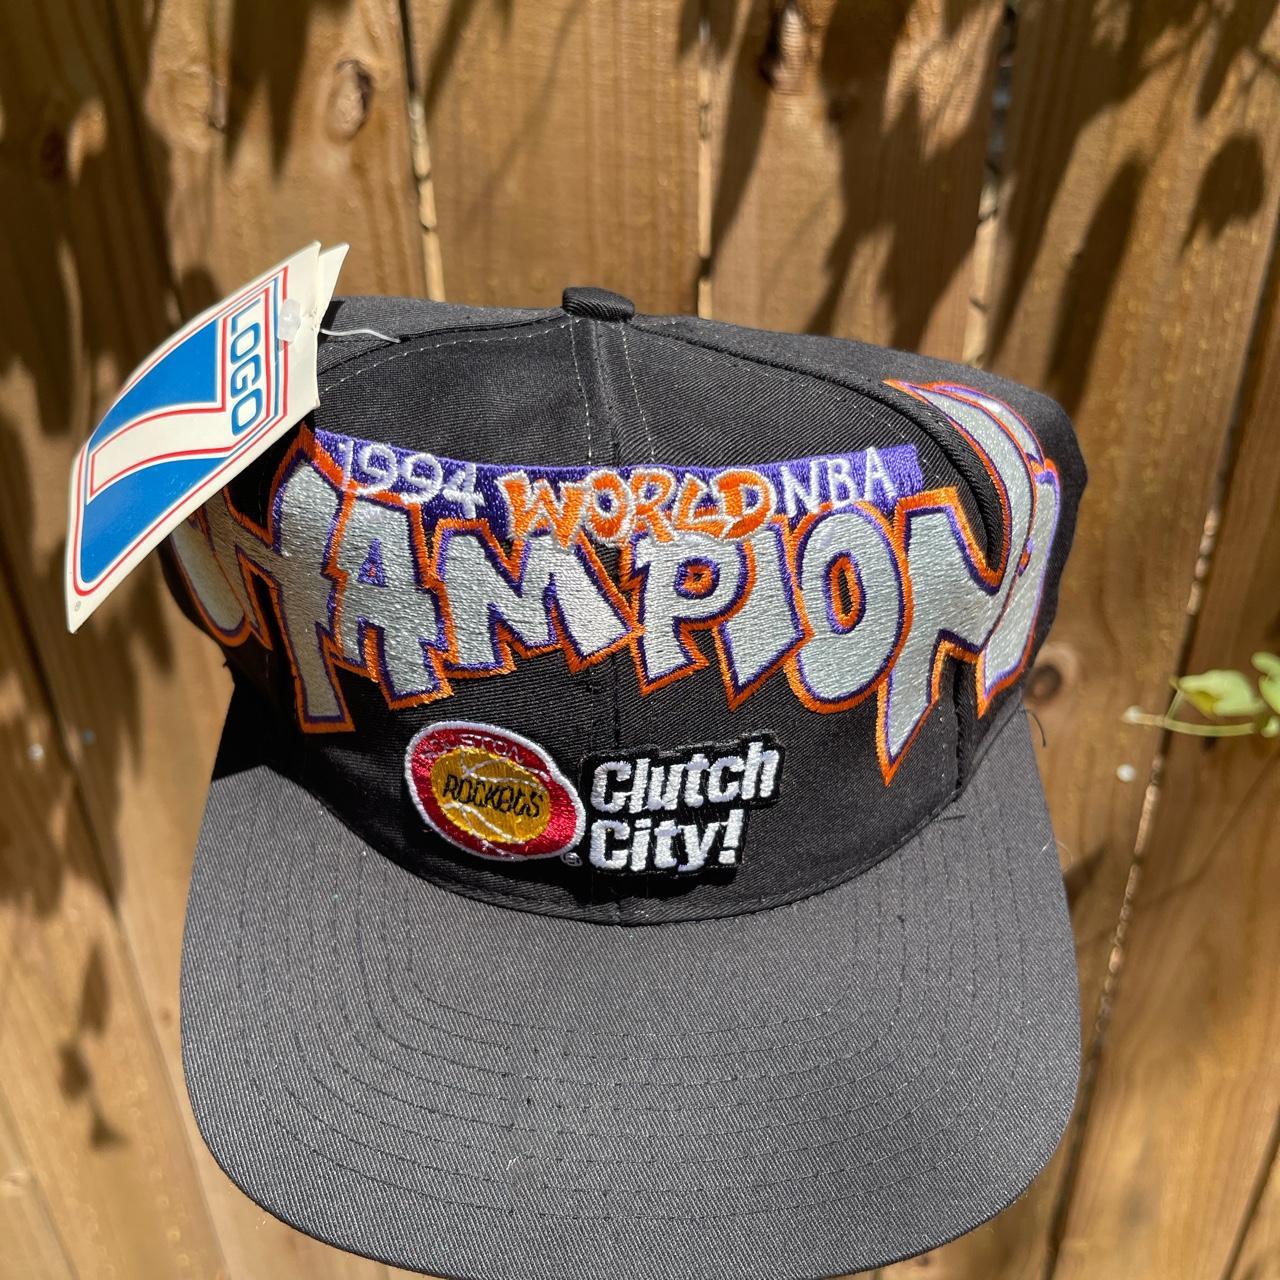 houston rockets 1994 championship hat